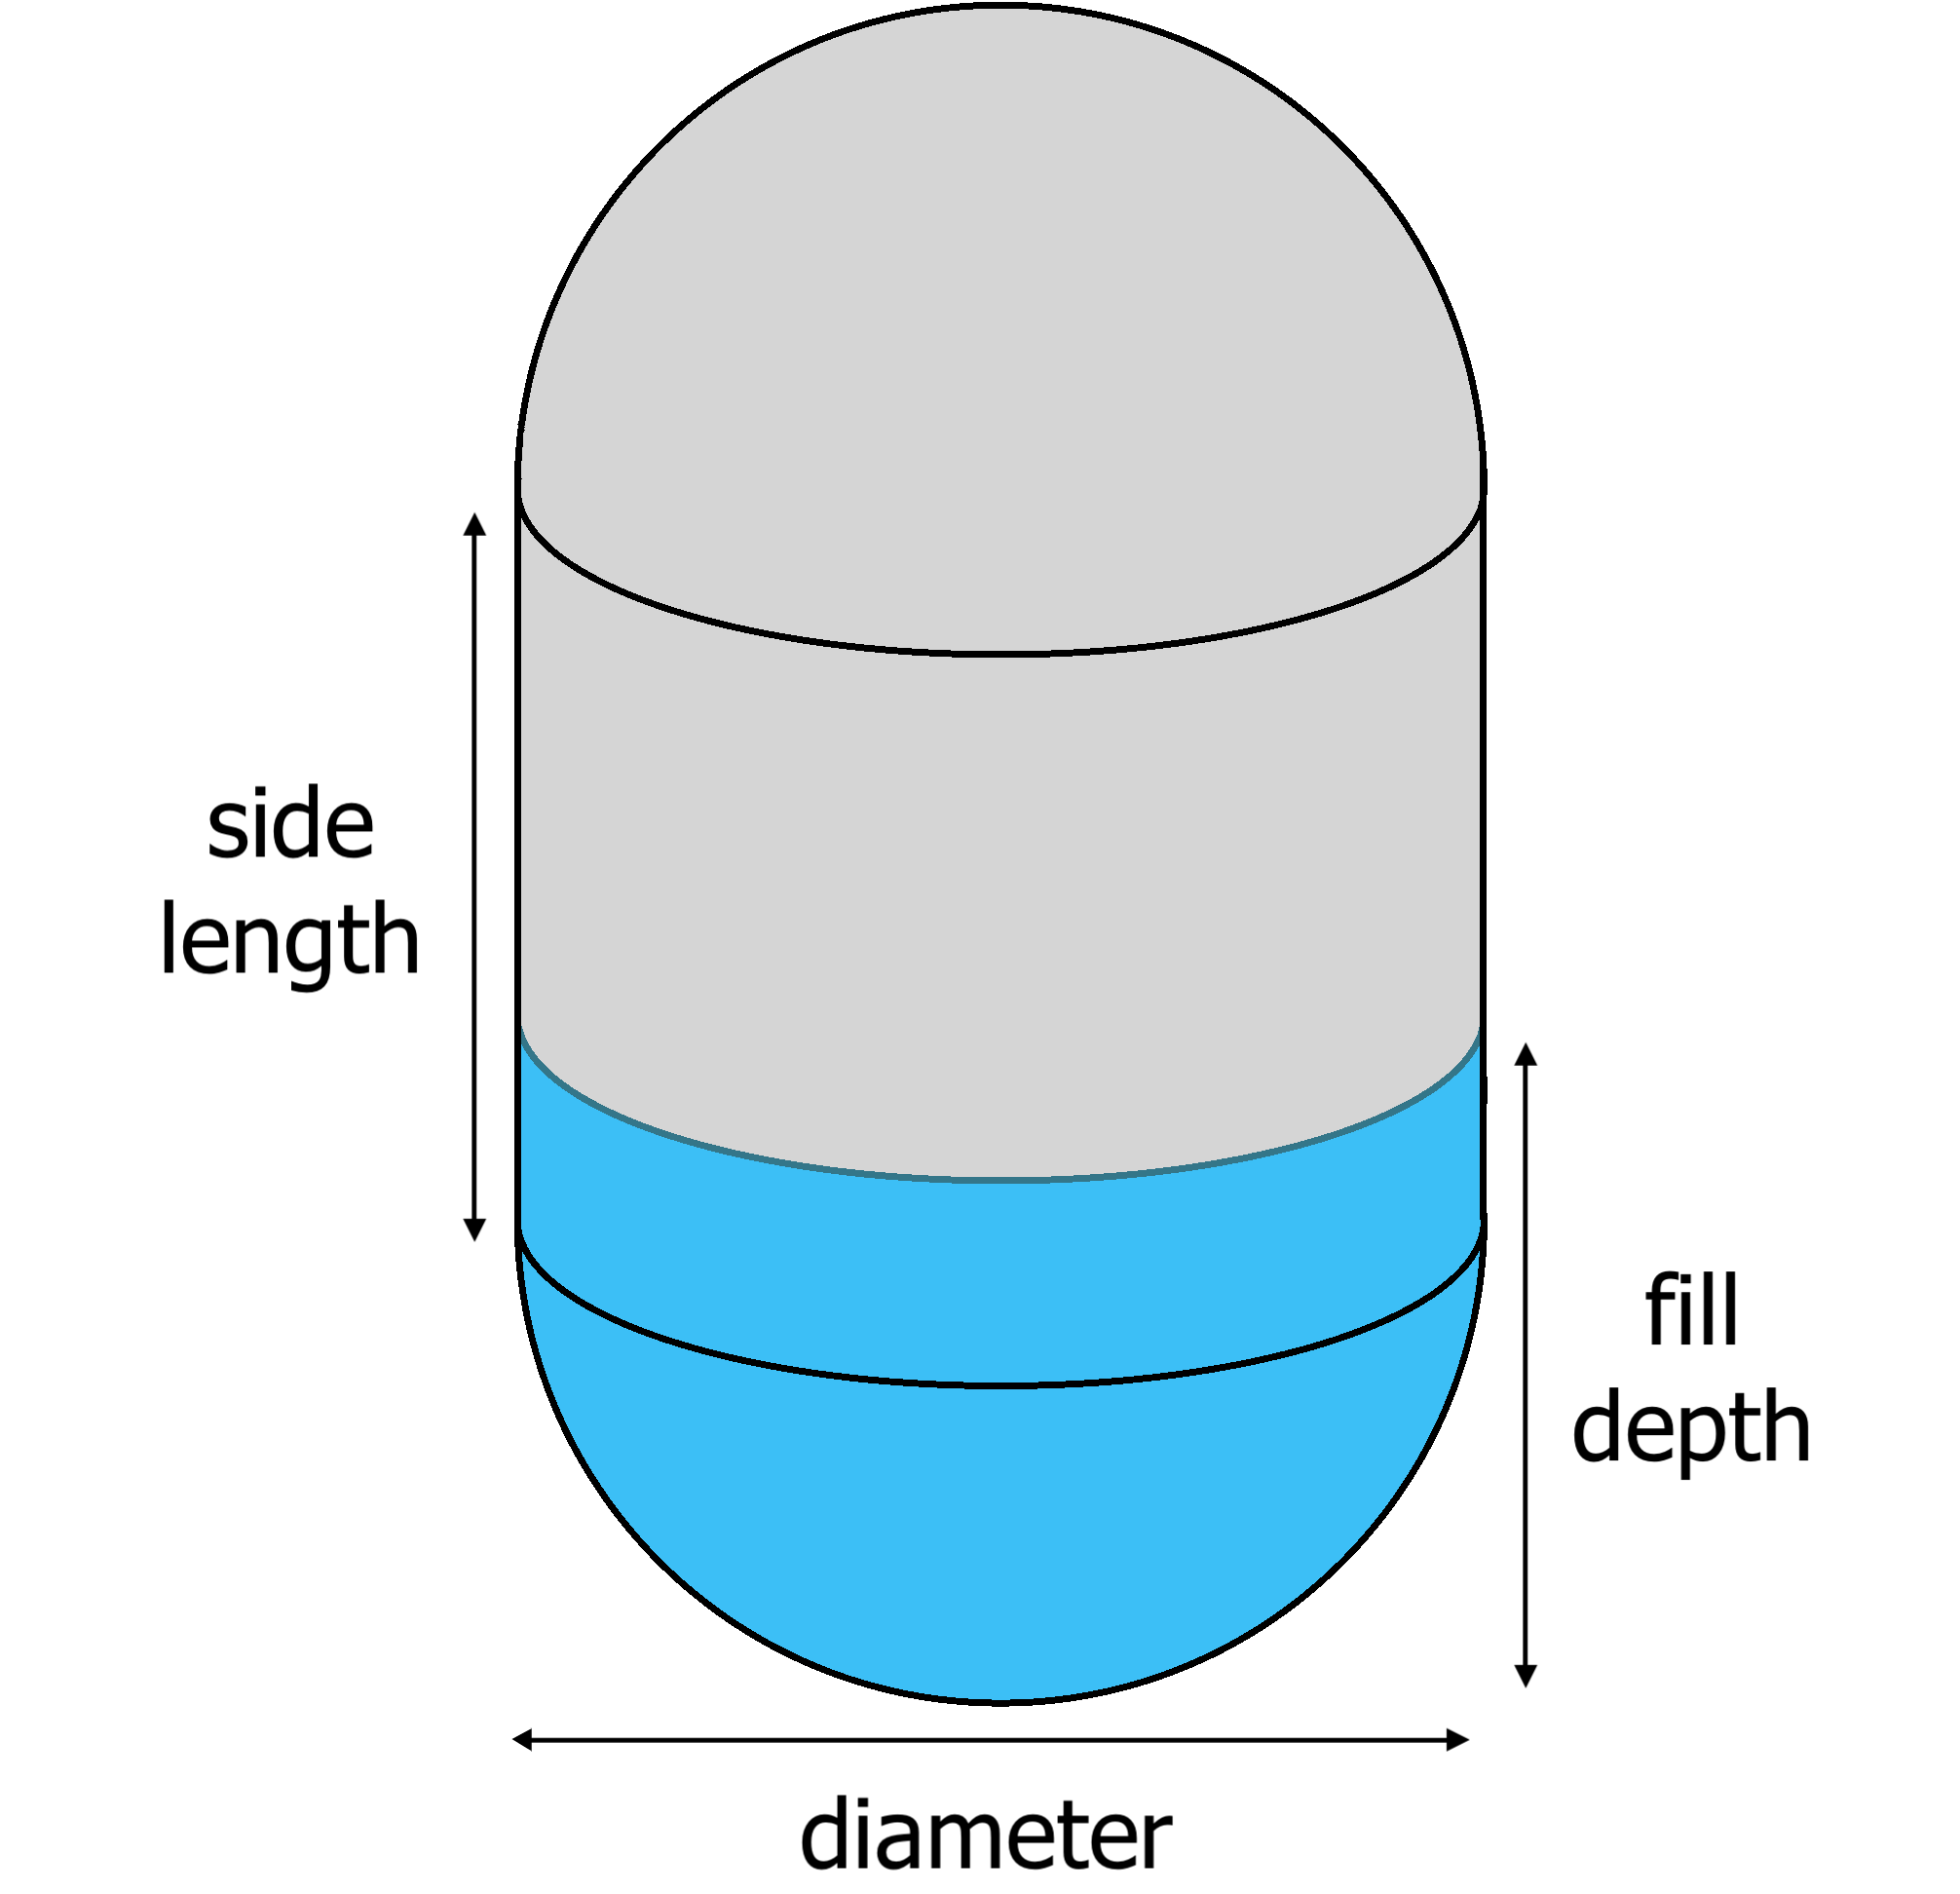 vertical capsule tank diagram showing side length, diameter, and fill depth dimensions